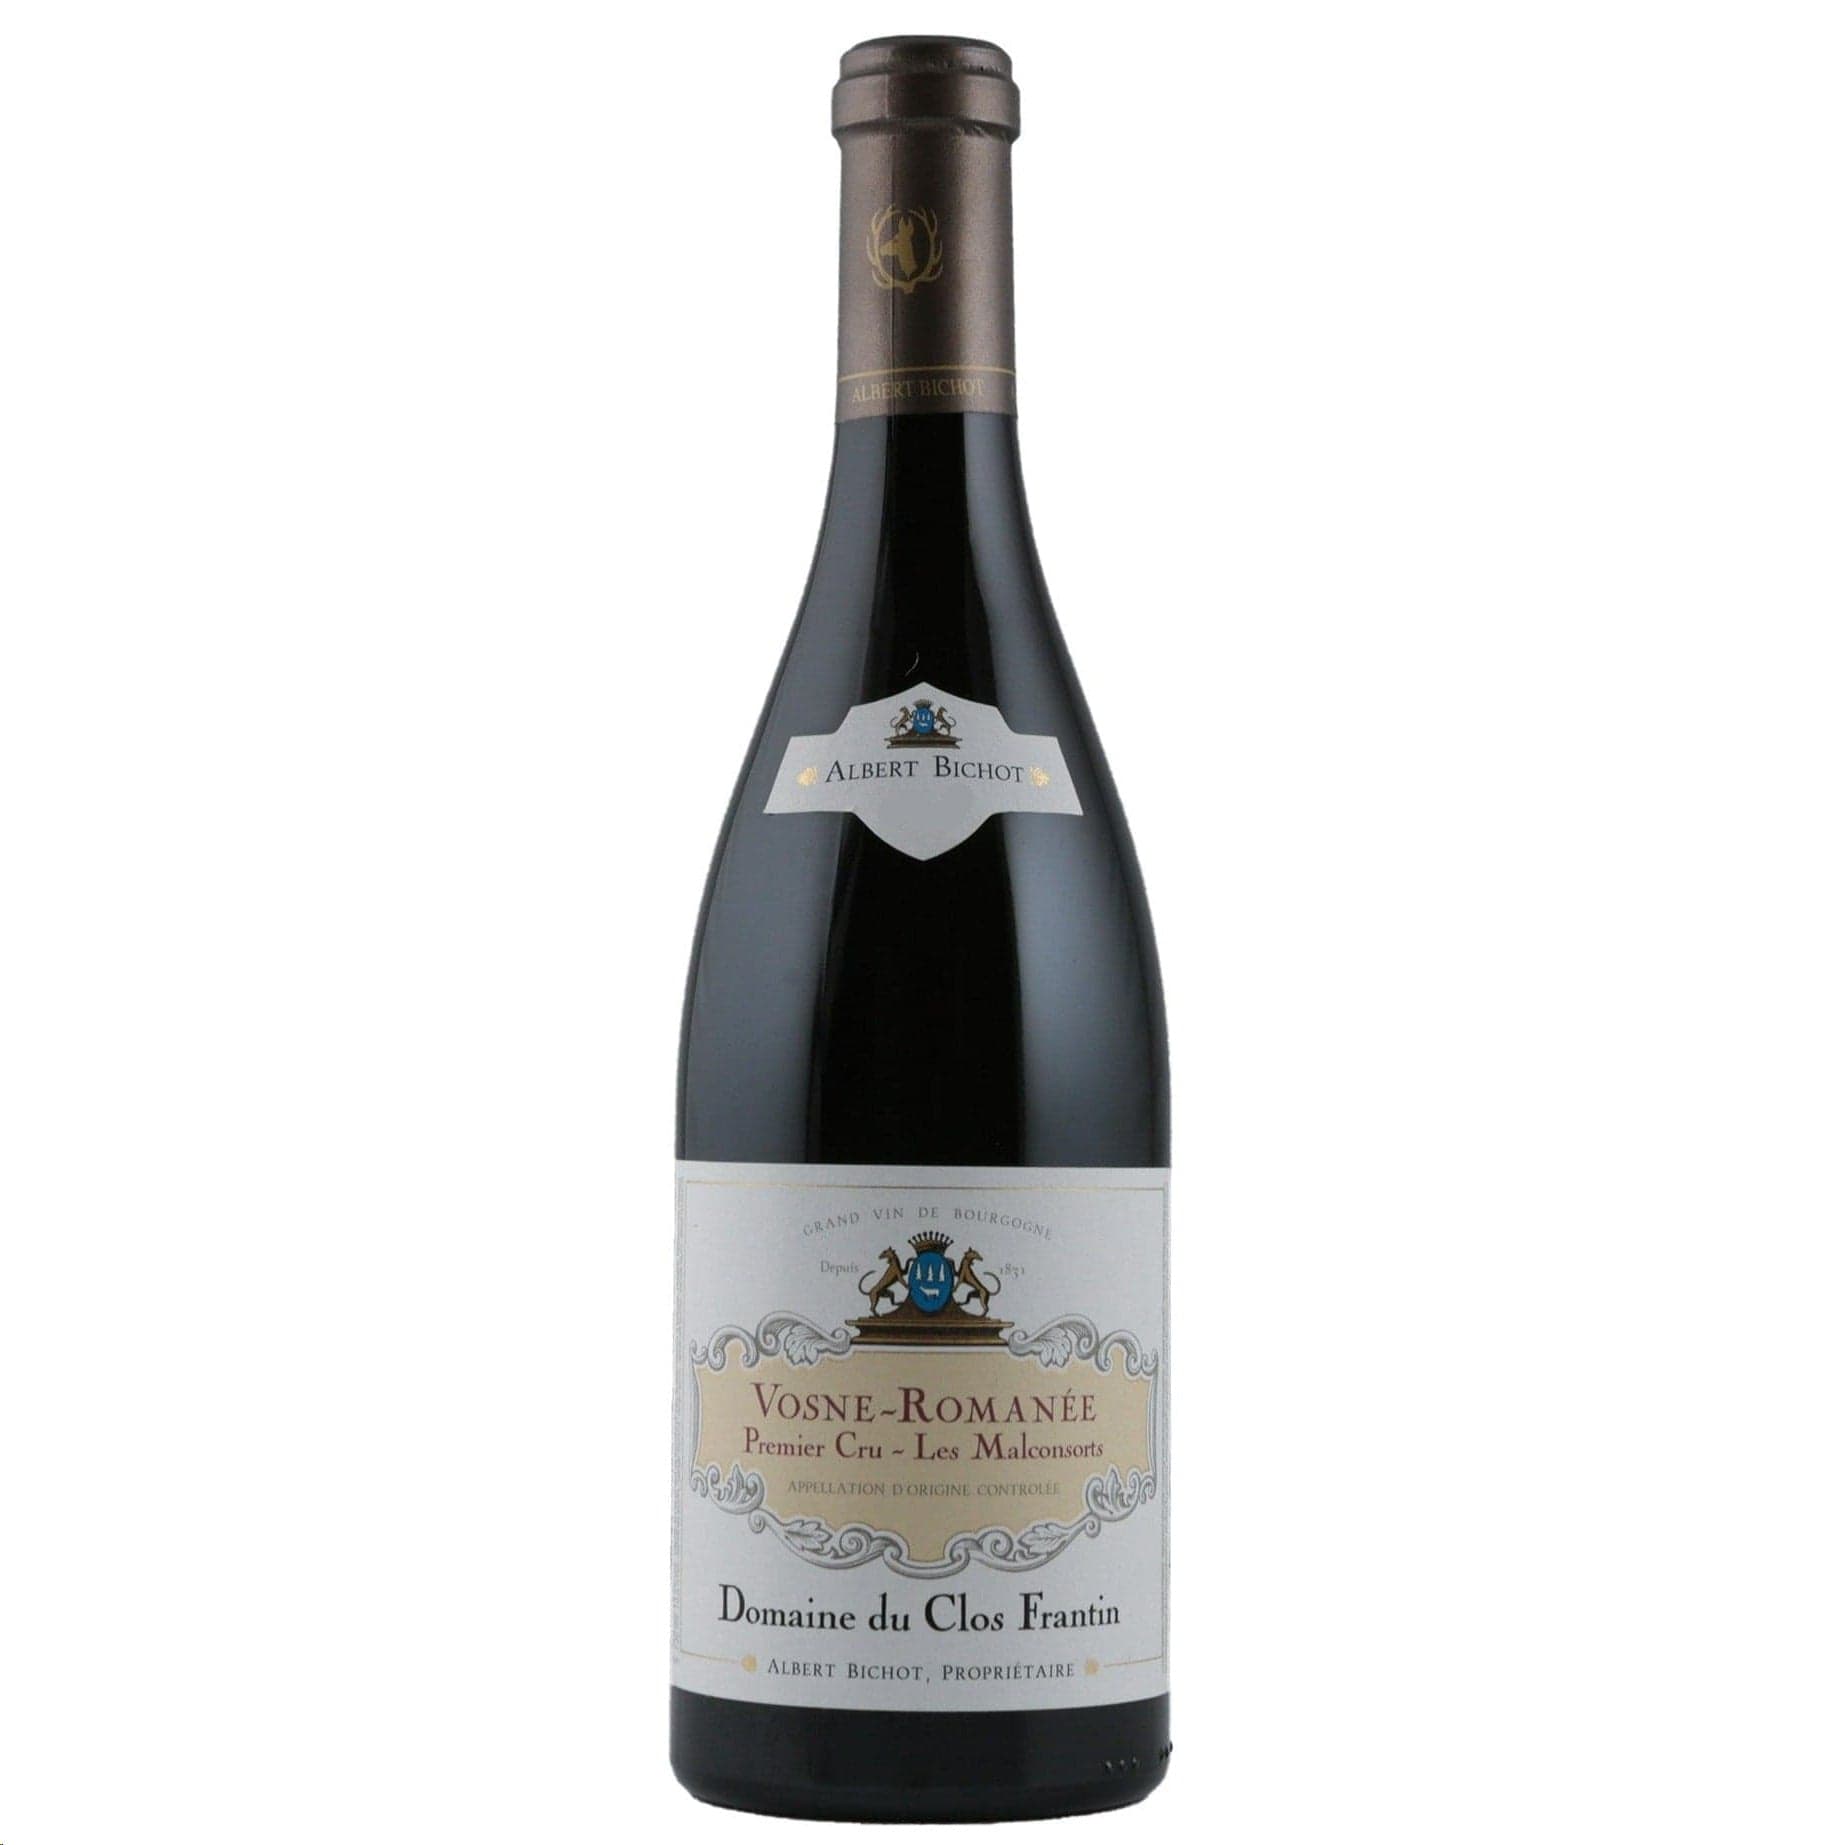 Single bottle of Red wine Albert Bichot Domaine du Clos Frantin, Vosne Malconsorts Premier Cru, Vosne-Romanee, 2019 100% Pinot Noir